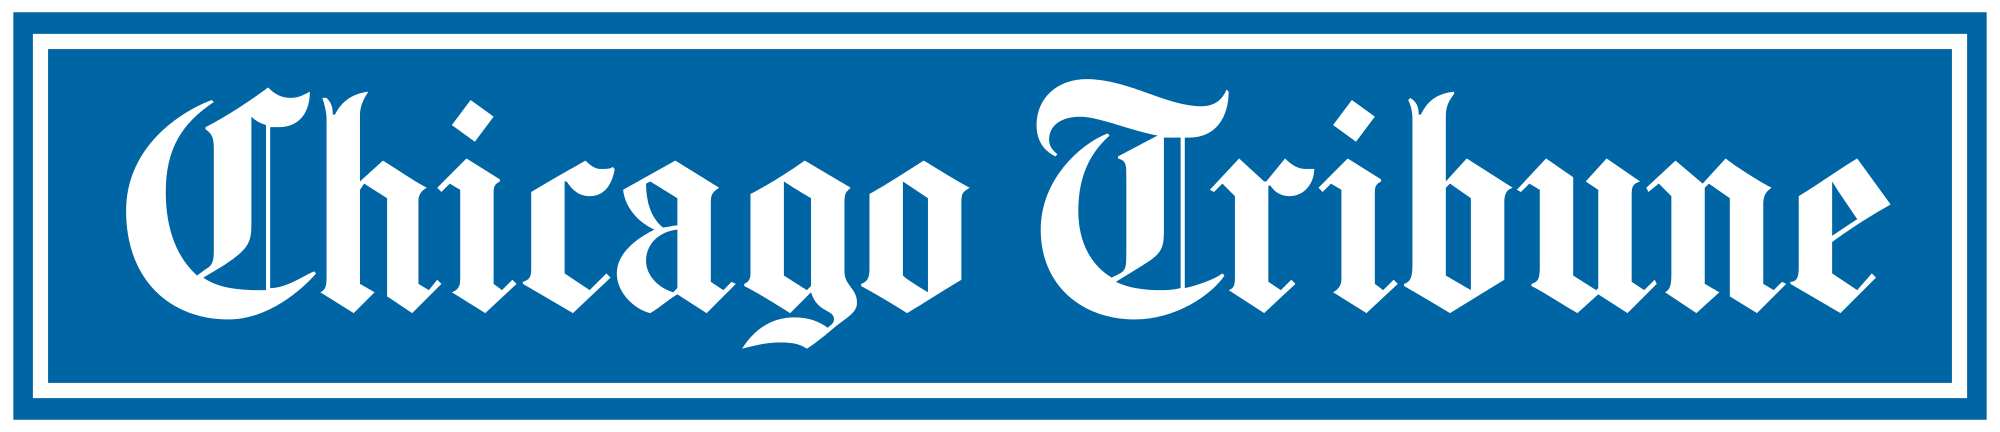 Chicago Tribune Blue Logo.png